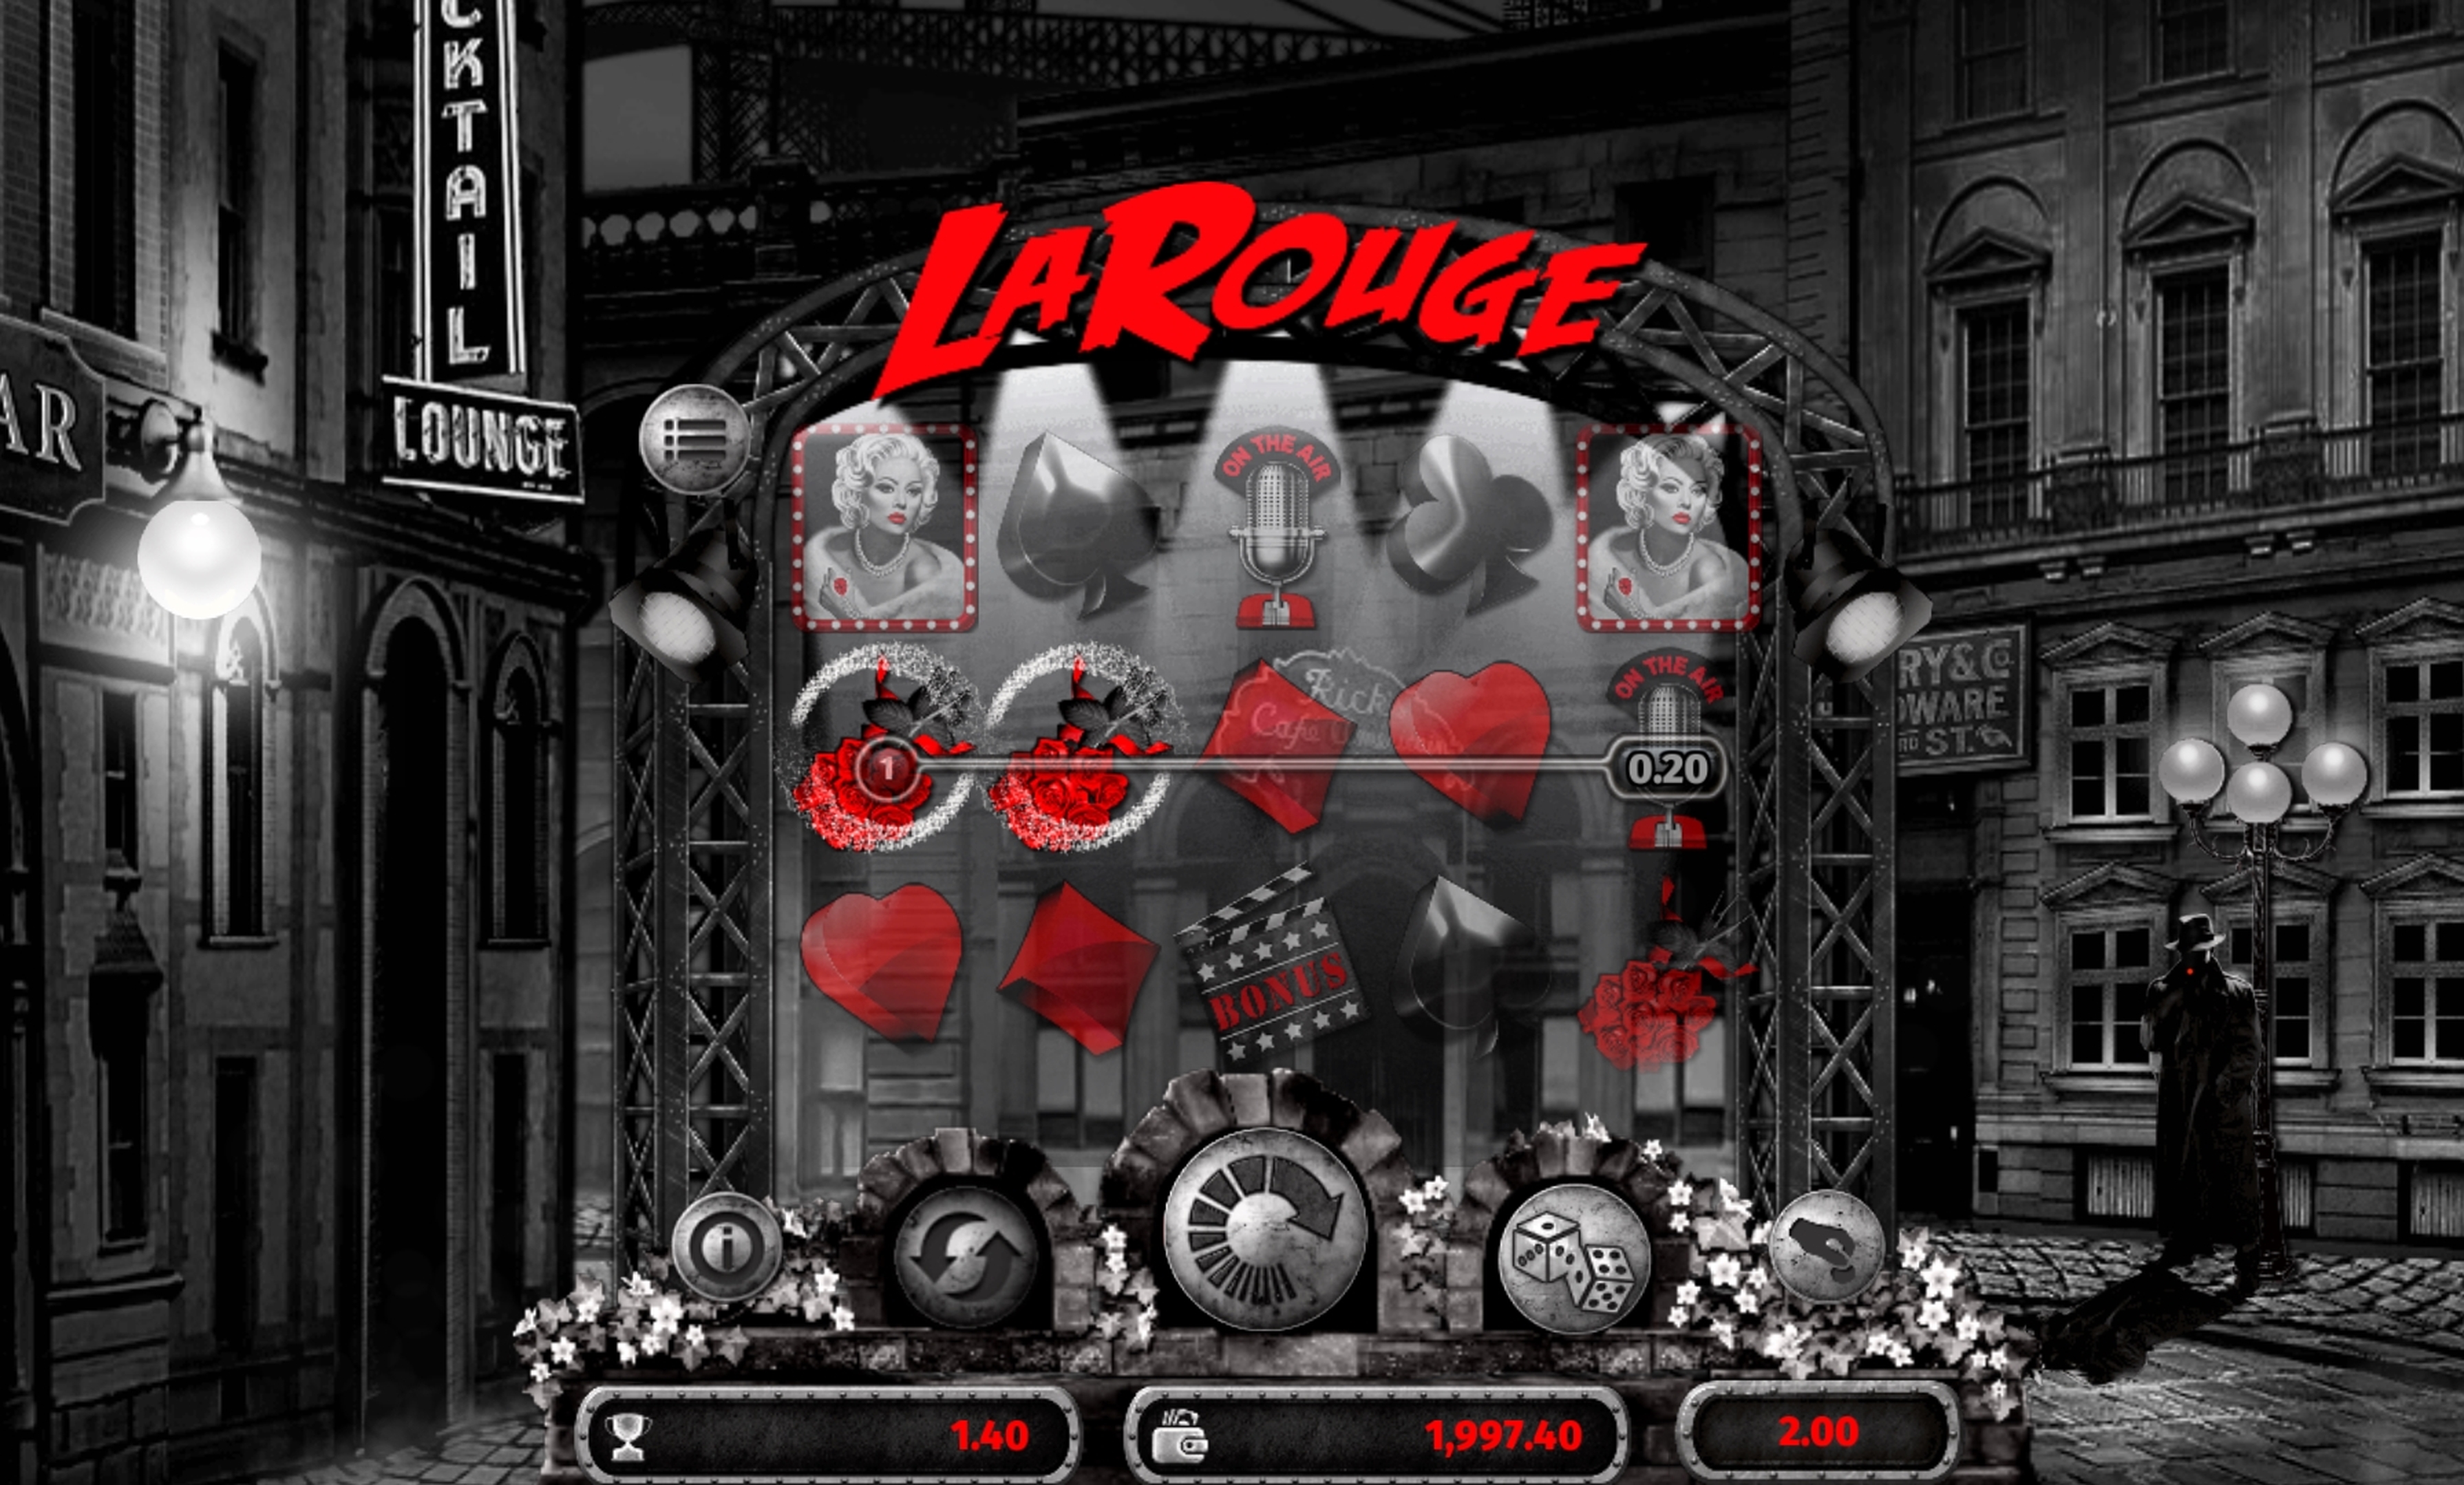 Win Money in La Rouge Free Slot Game by Old Skool Studios